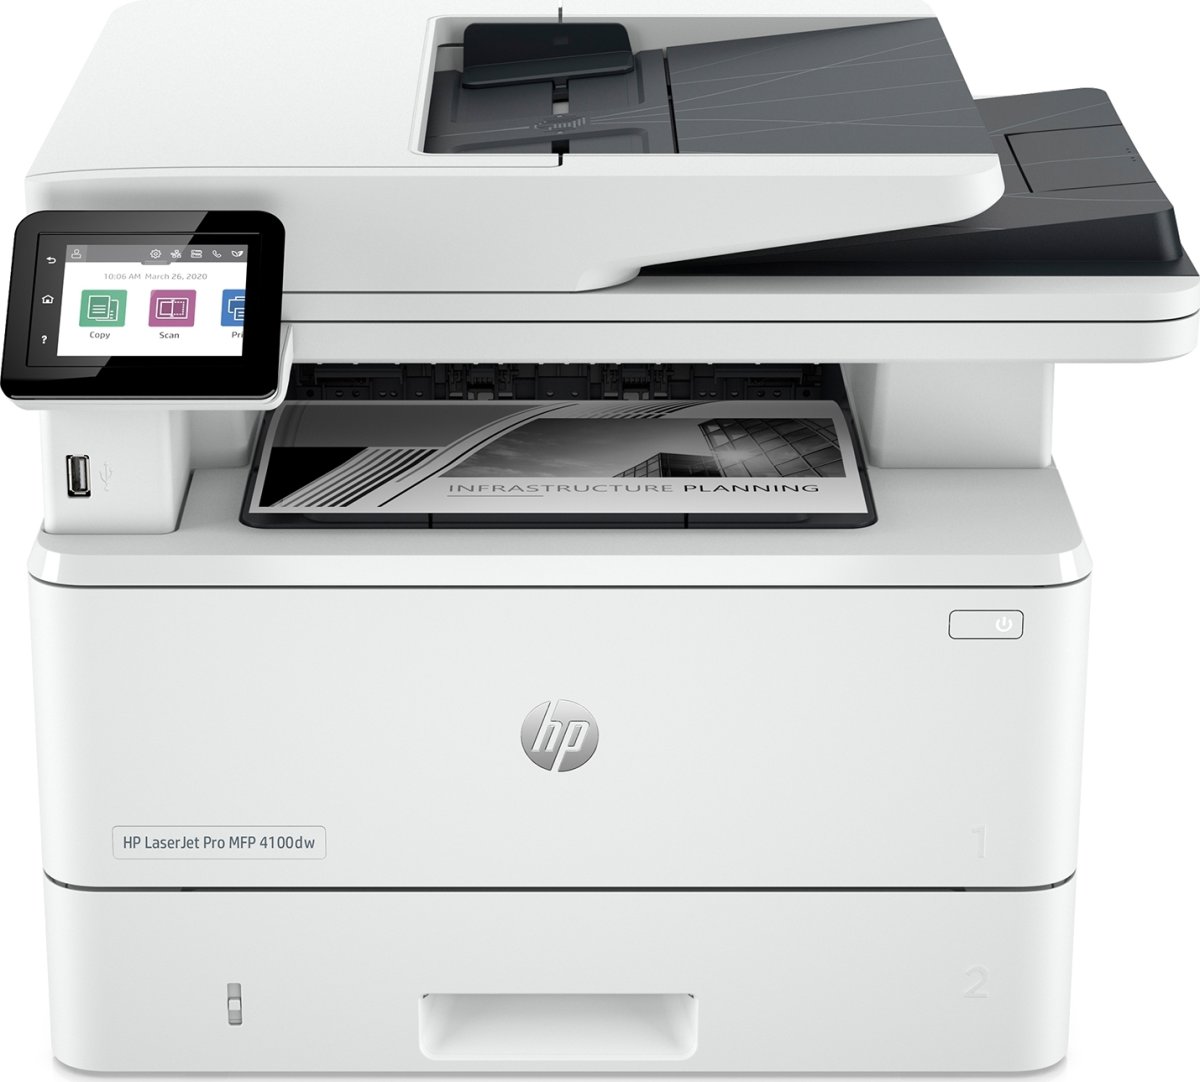 HP LaserJet Pro MFP 4102dw Sort/Hvid Laserprinter